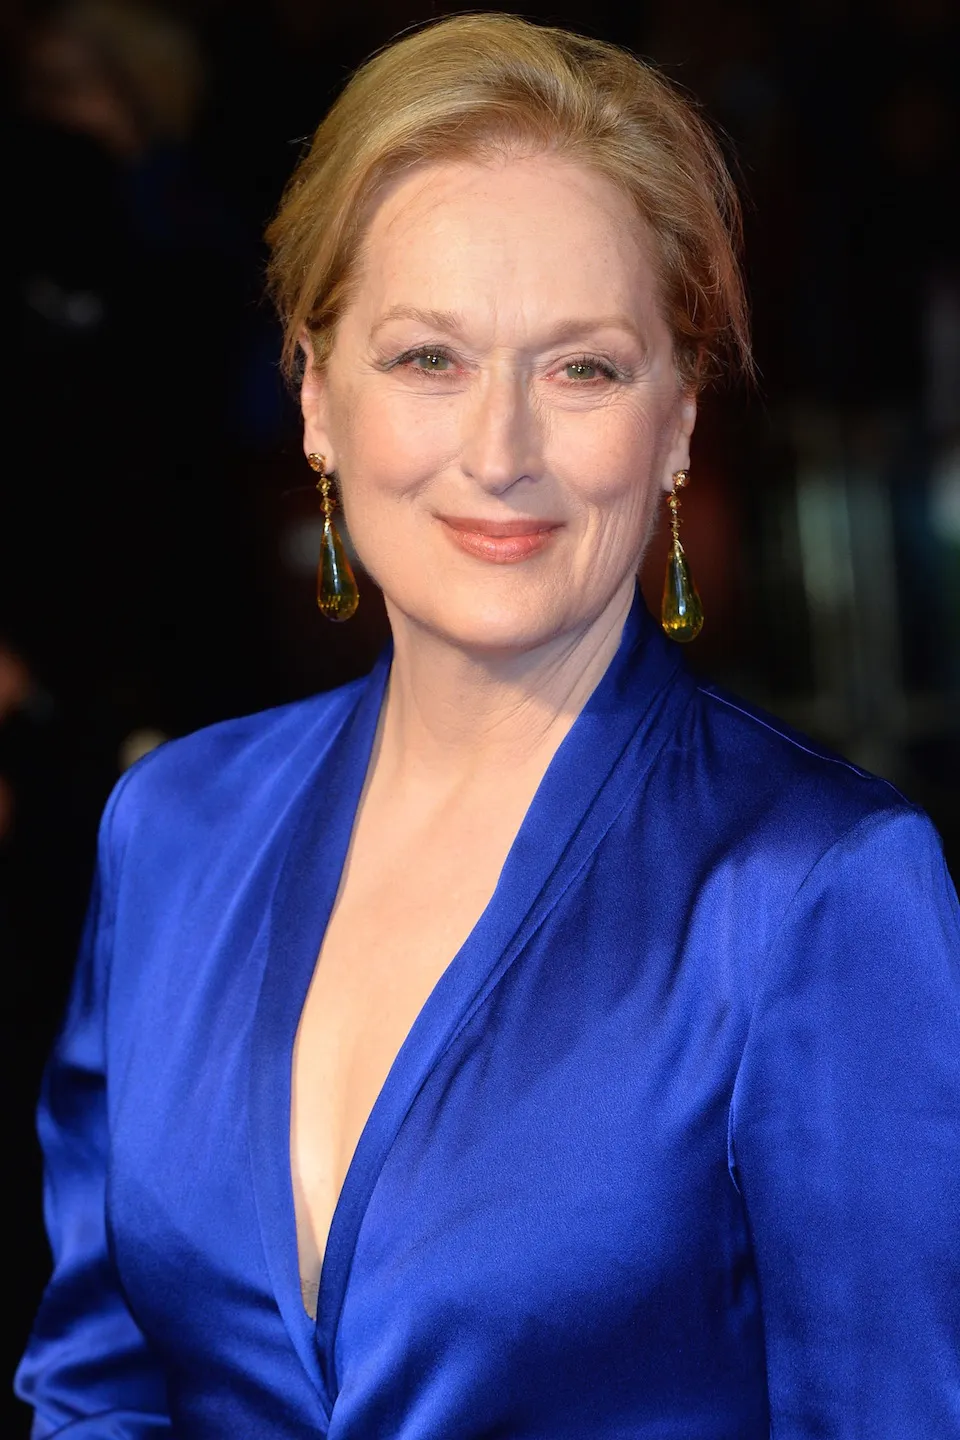 In the film 'The Devil Wears Prada', where does Meryl Streep's character work?